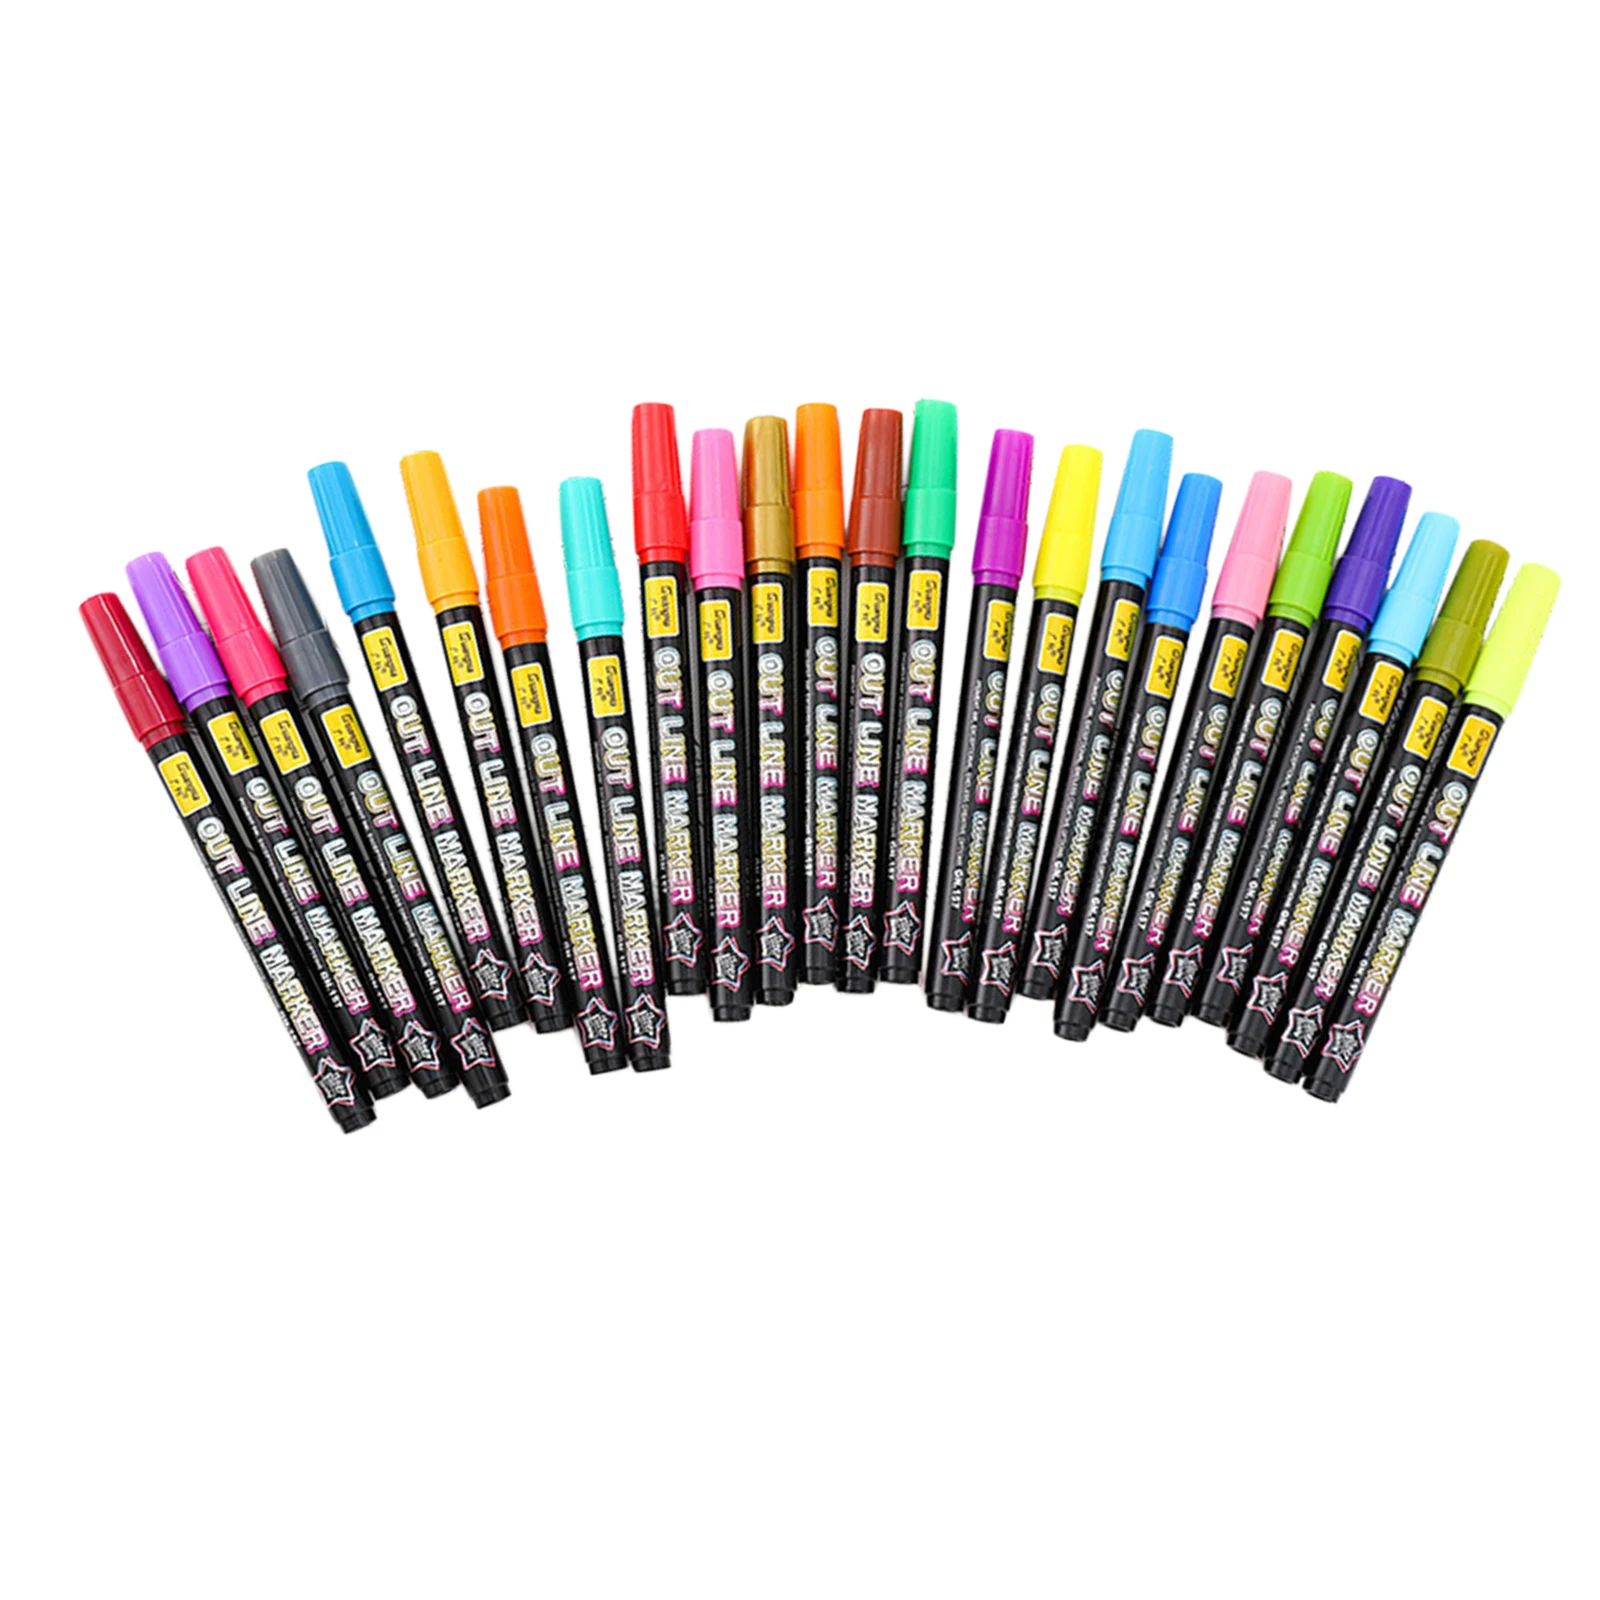 24pcs Metallic Pen Double Line Pen Set Metallic Color Highlighter Marker Pen Doubledraw Outline Marker